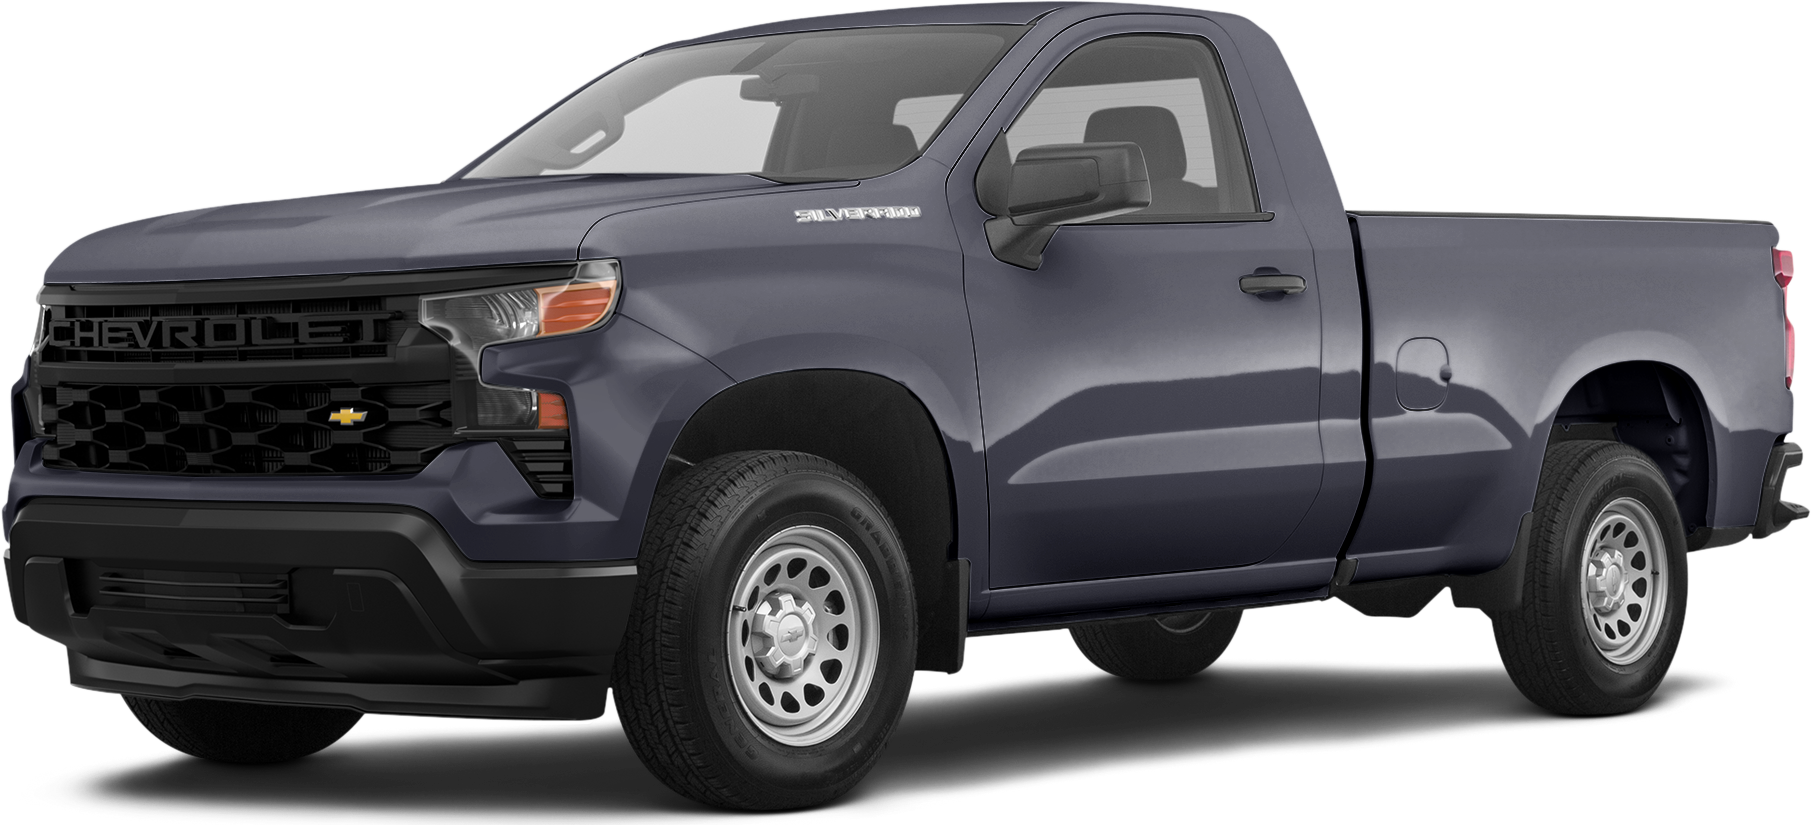 2022 Chevrolet Silverado 1500 Price, Value, Ratings & Reviews